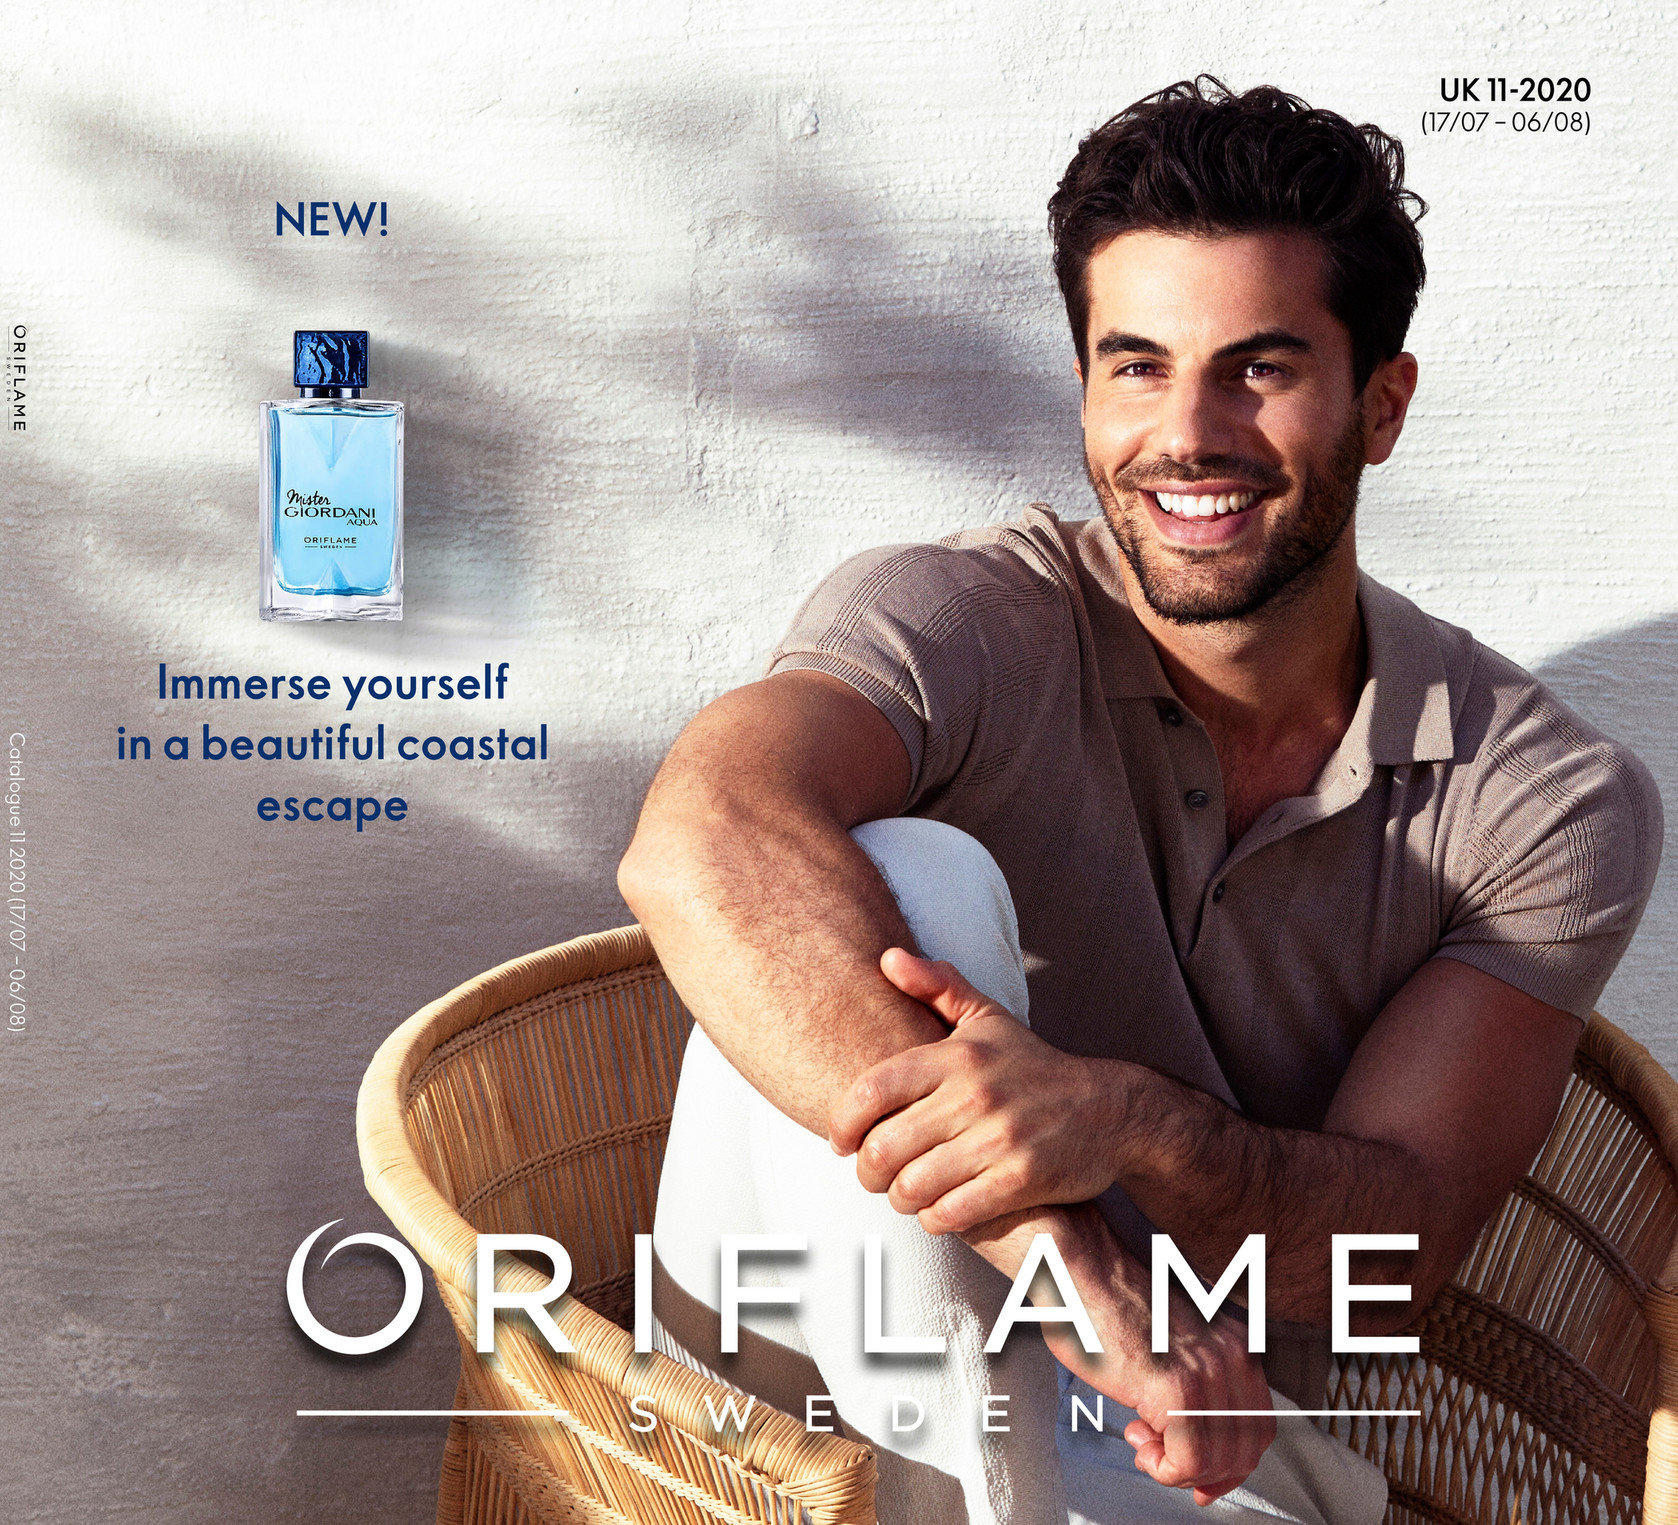 Orinet - Oriflame Cosmetics Catalogue 11 of 2020 UK & USA - Page 1 ...